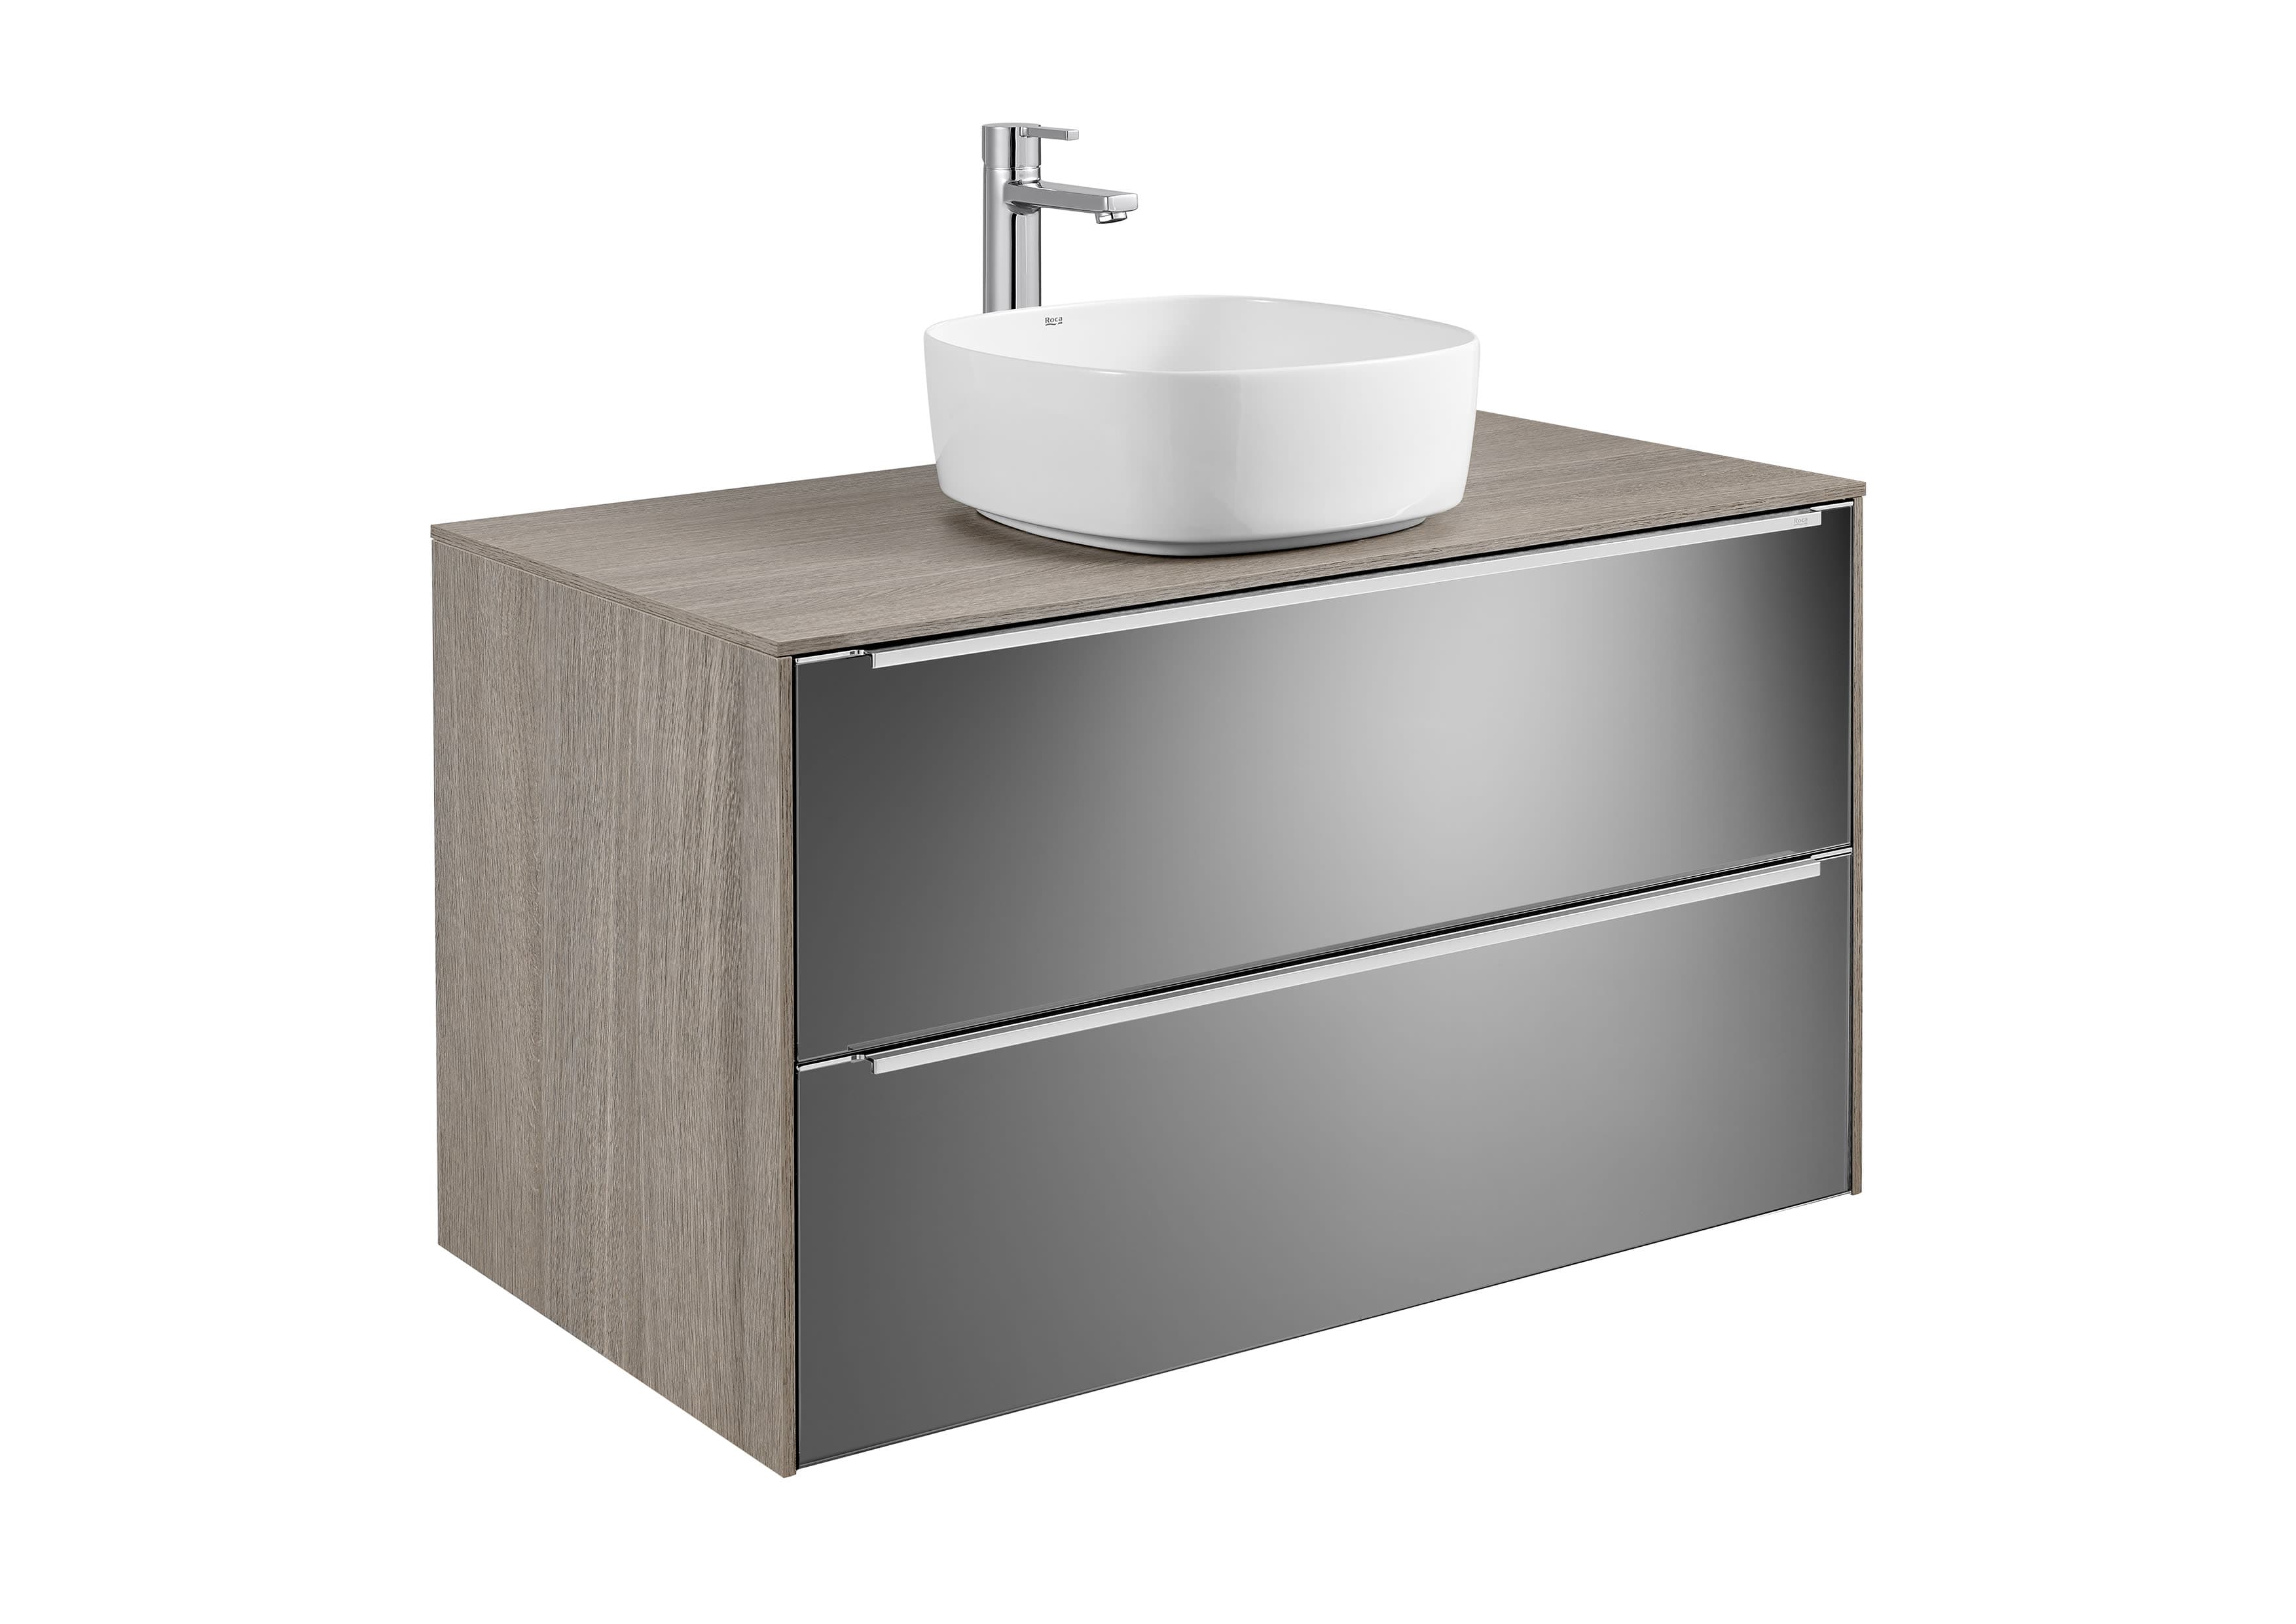 Sanitaire Meubles Salle de bain INSPIRA A851081402 Meuble 2 tiroirs avec plan pour vasque à poser Roca 6 - Mirage ceramica